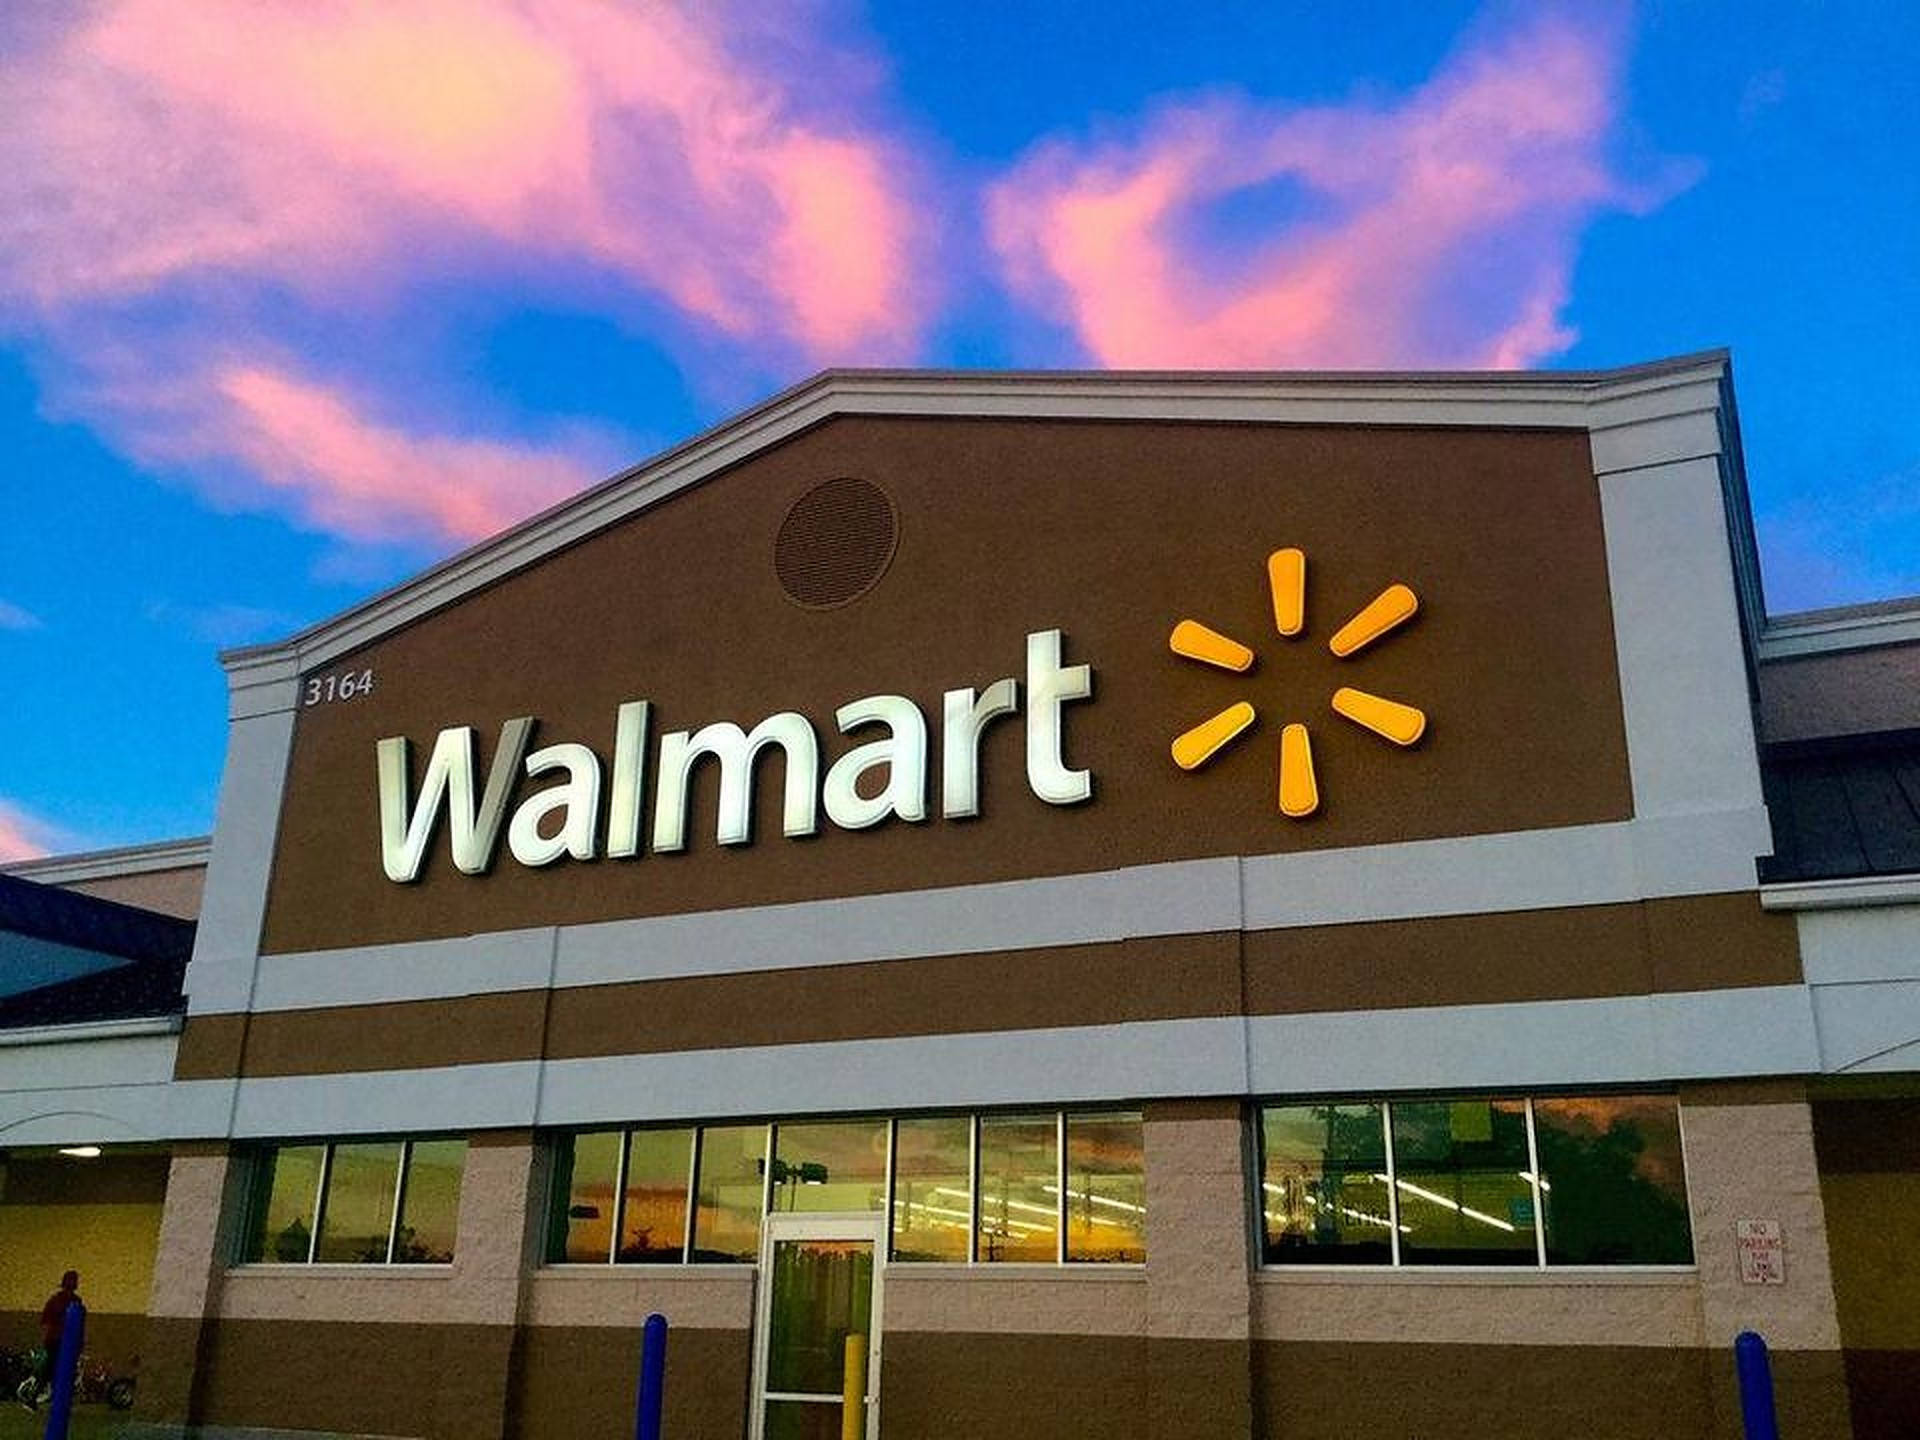 Walmart Building During Sunset Background